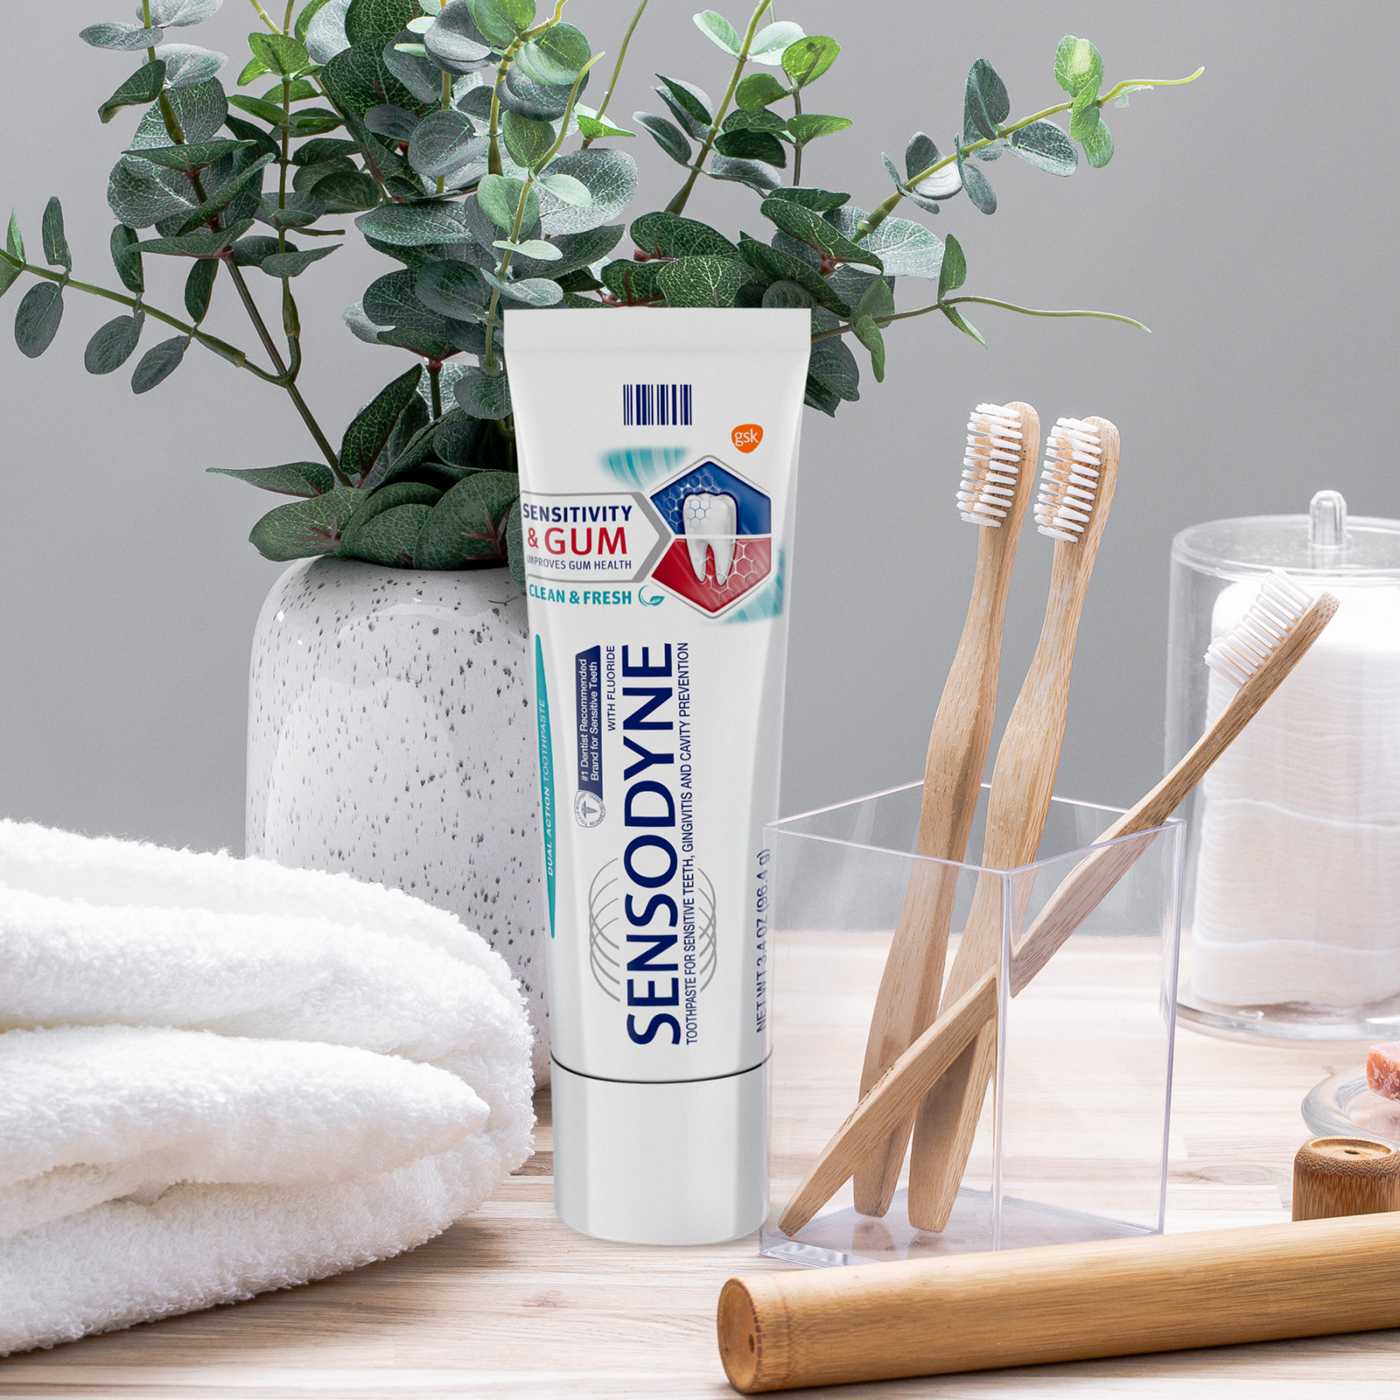 Sensodyne Sensitivity and Gum Toothpaste - Clean & Fresh; image 4 of 7